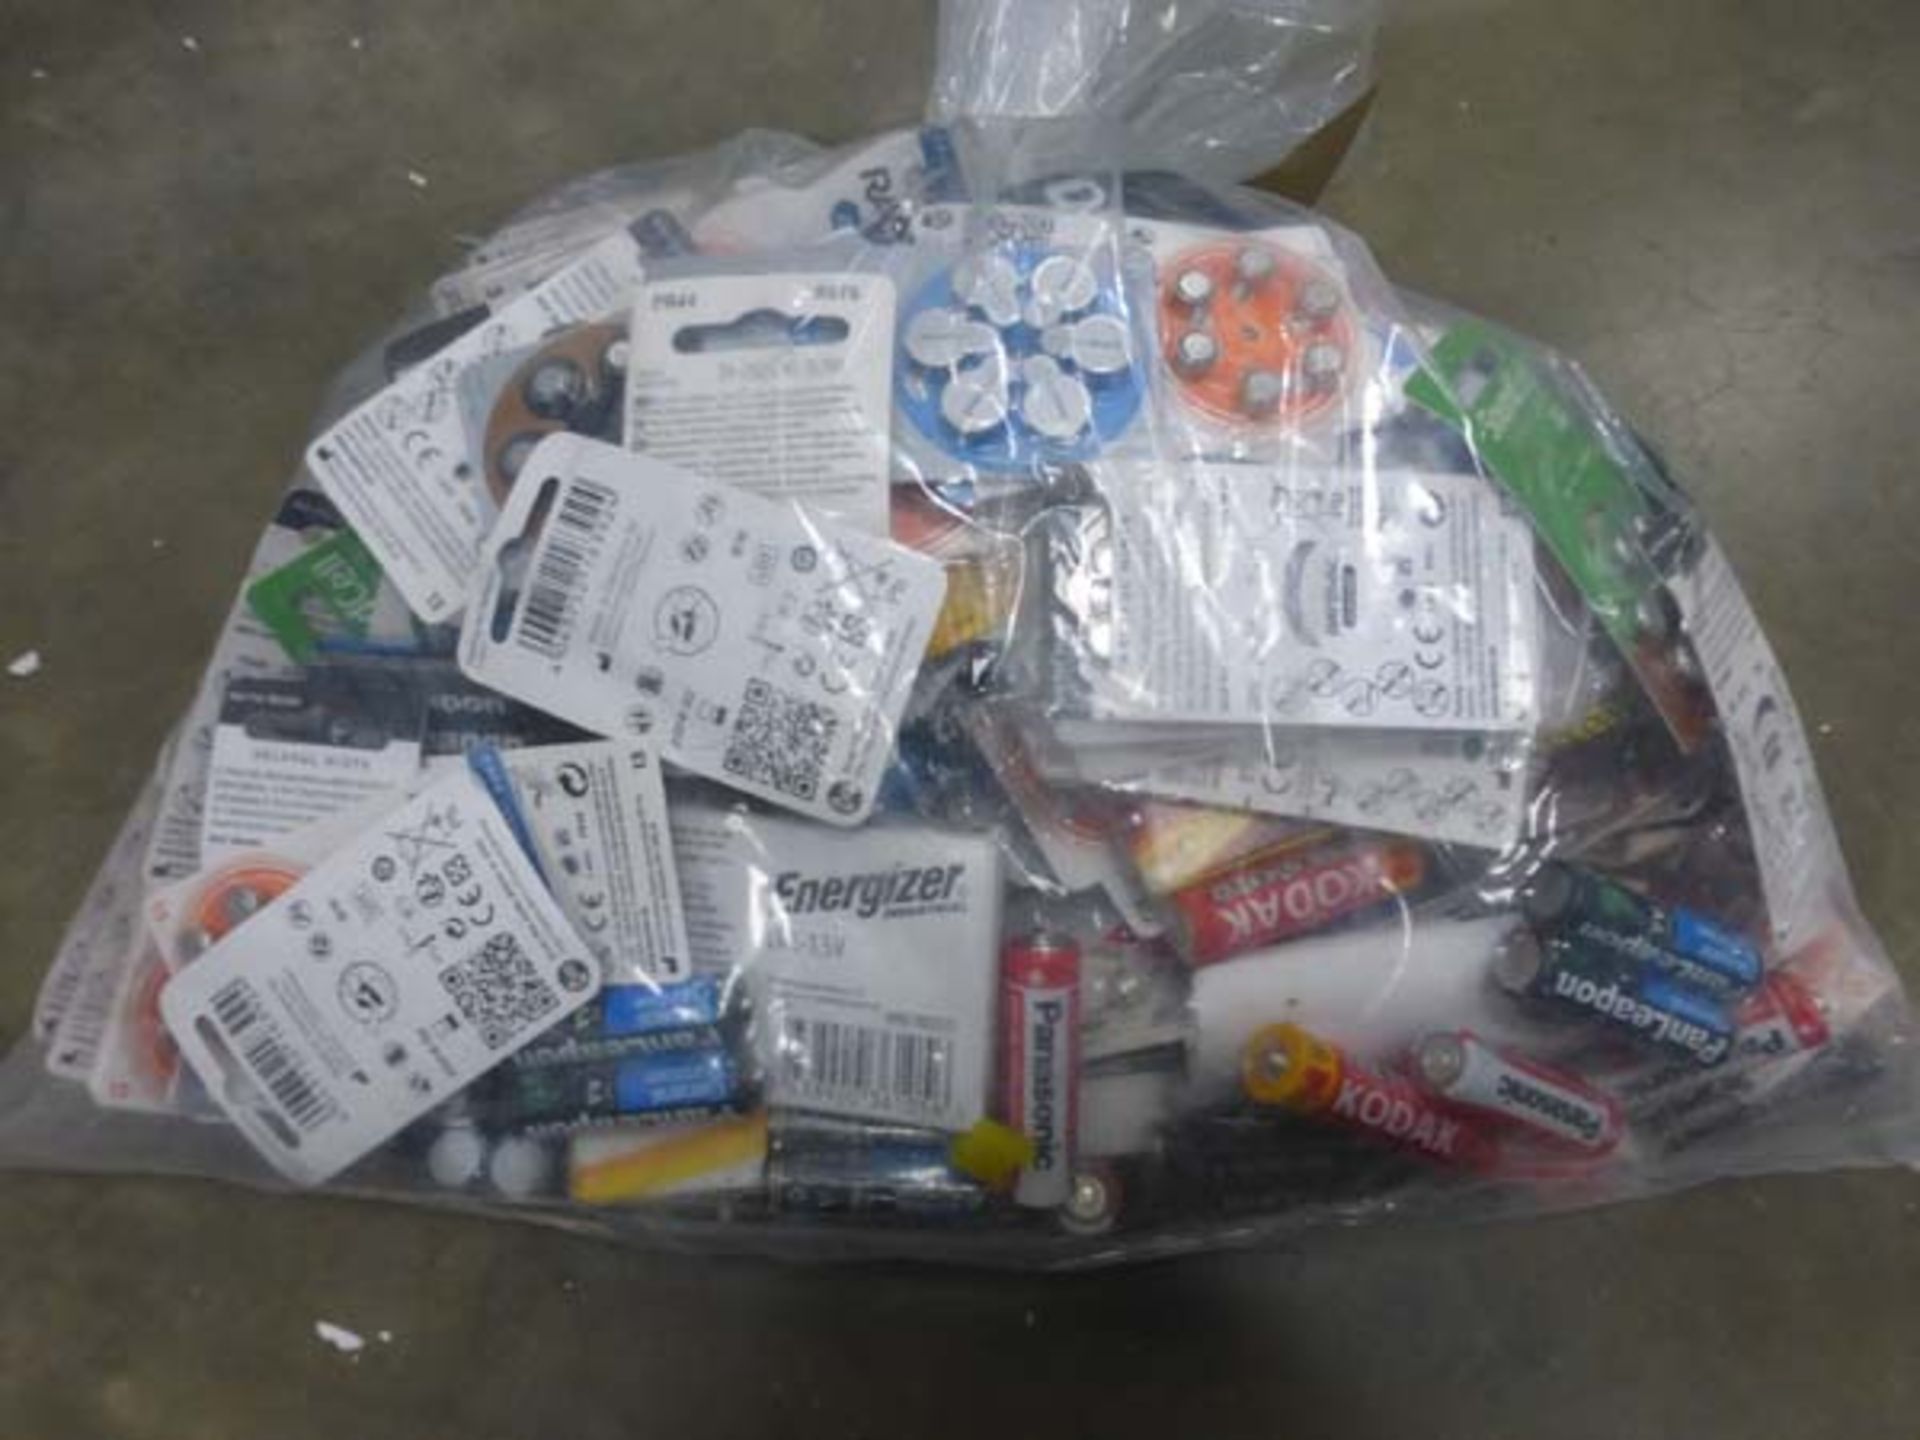 Bag containing various batteries by Energiser, Kodak, Panasonic inc. large variety of hearing aid